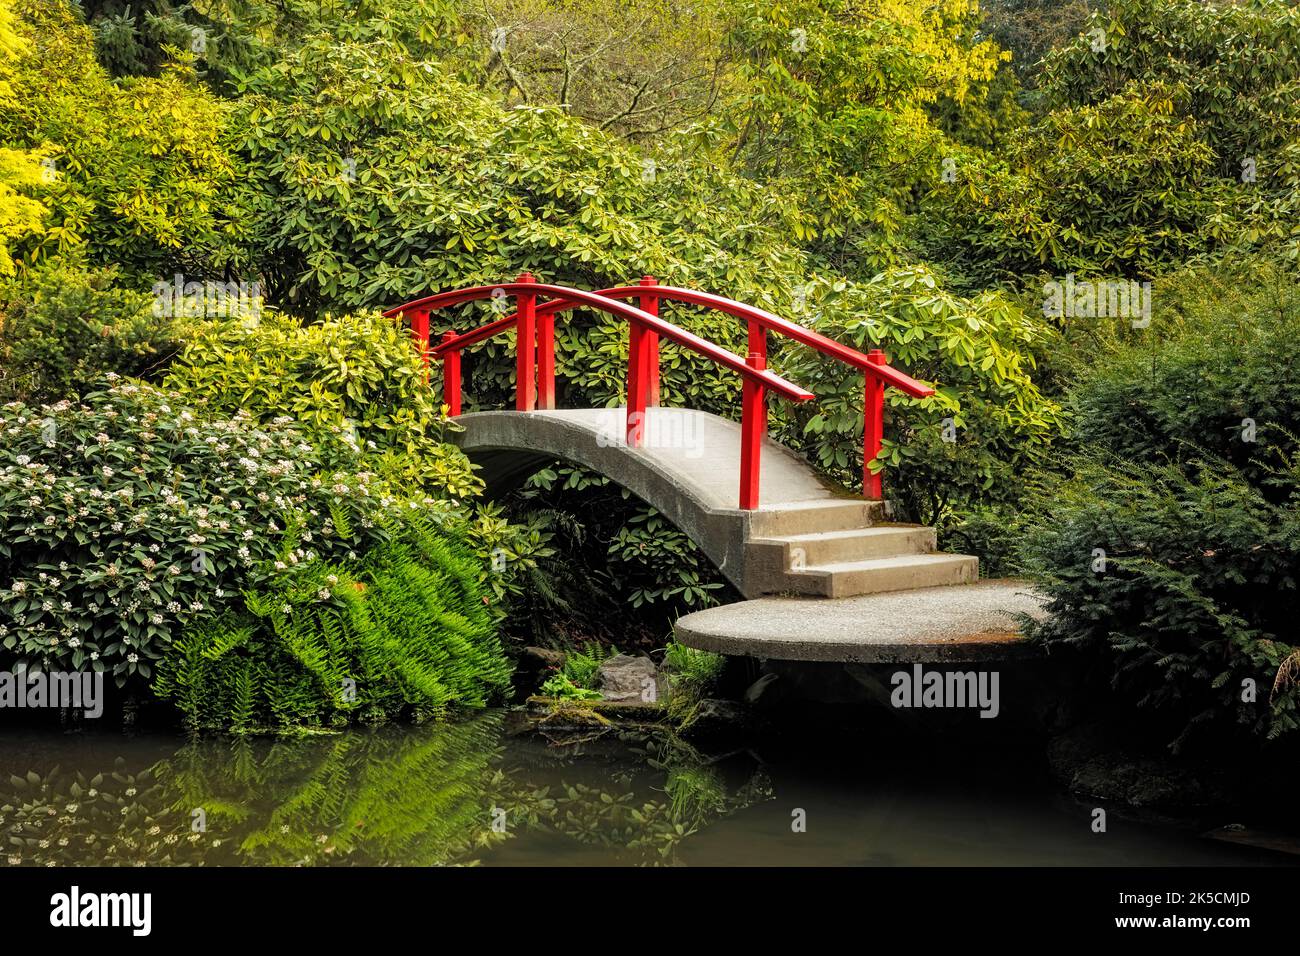 WA22141-00...WASHINGTON - Moon Bridge in den japanischen Kubota Gardens, einem Seattle City Park. Stockfoto